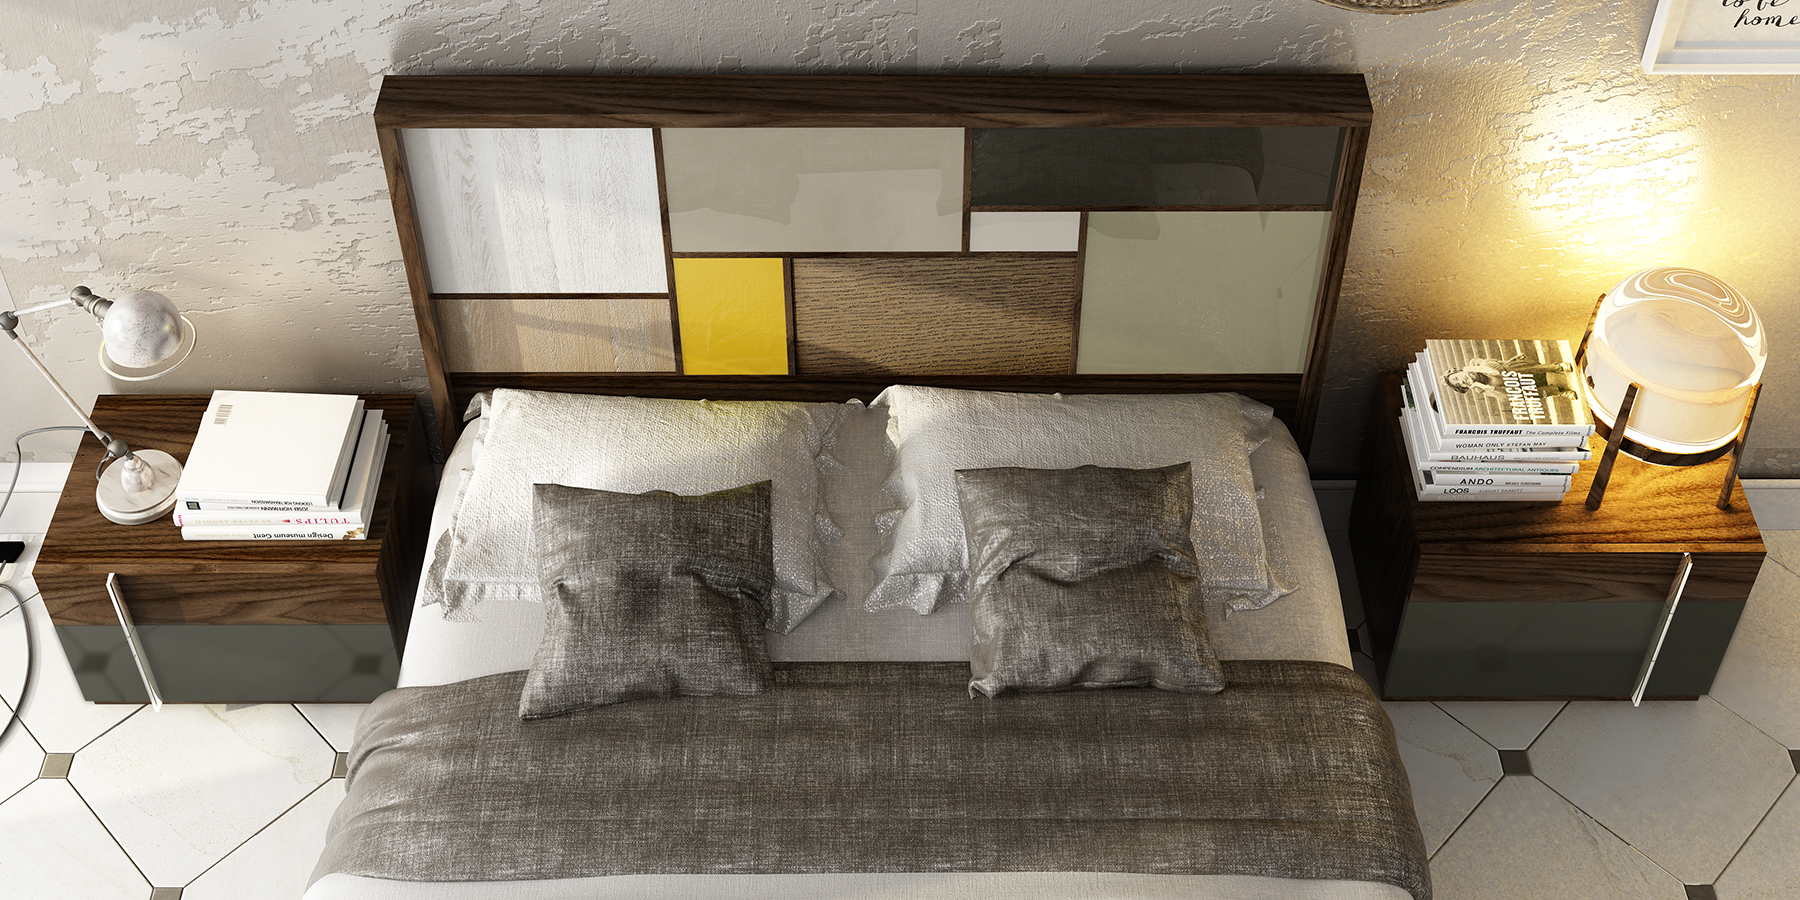 Extravagant Wood Luxury Platform Bed